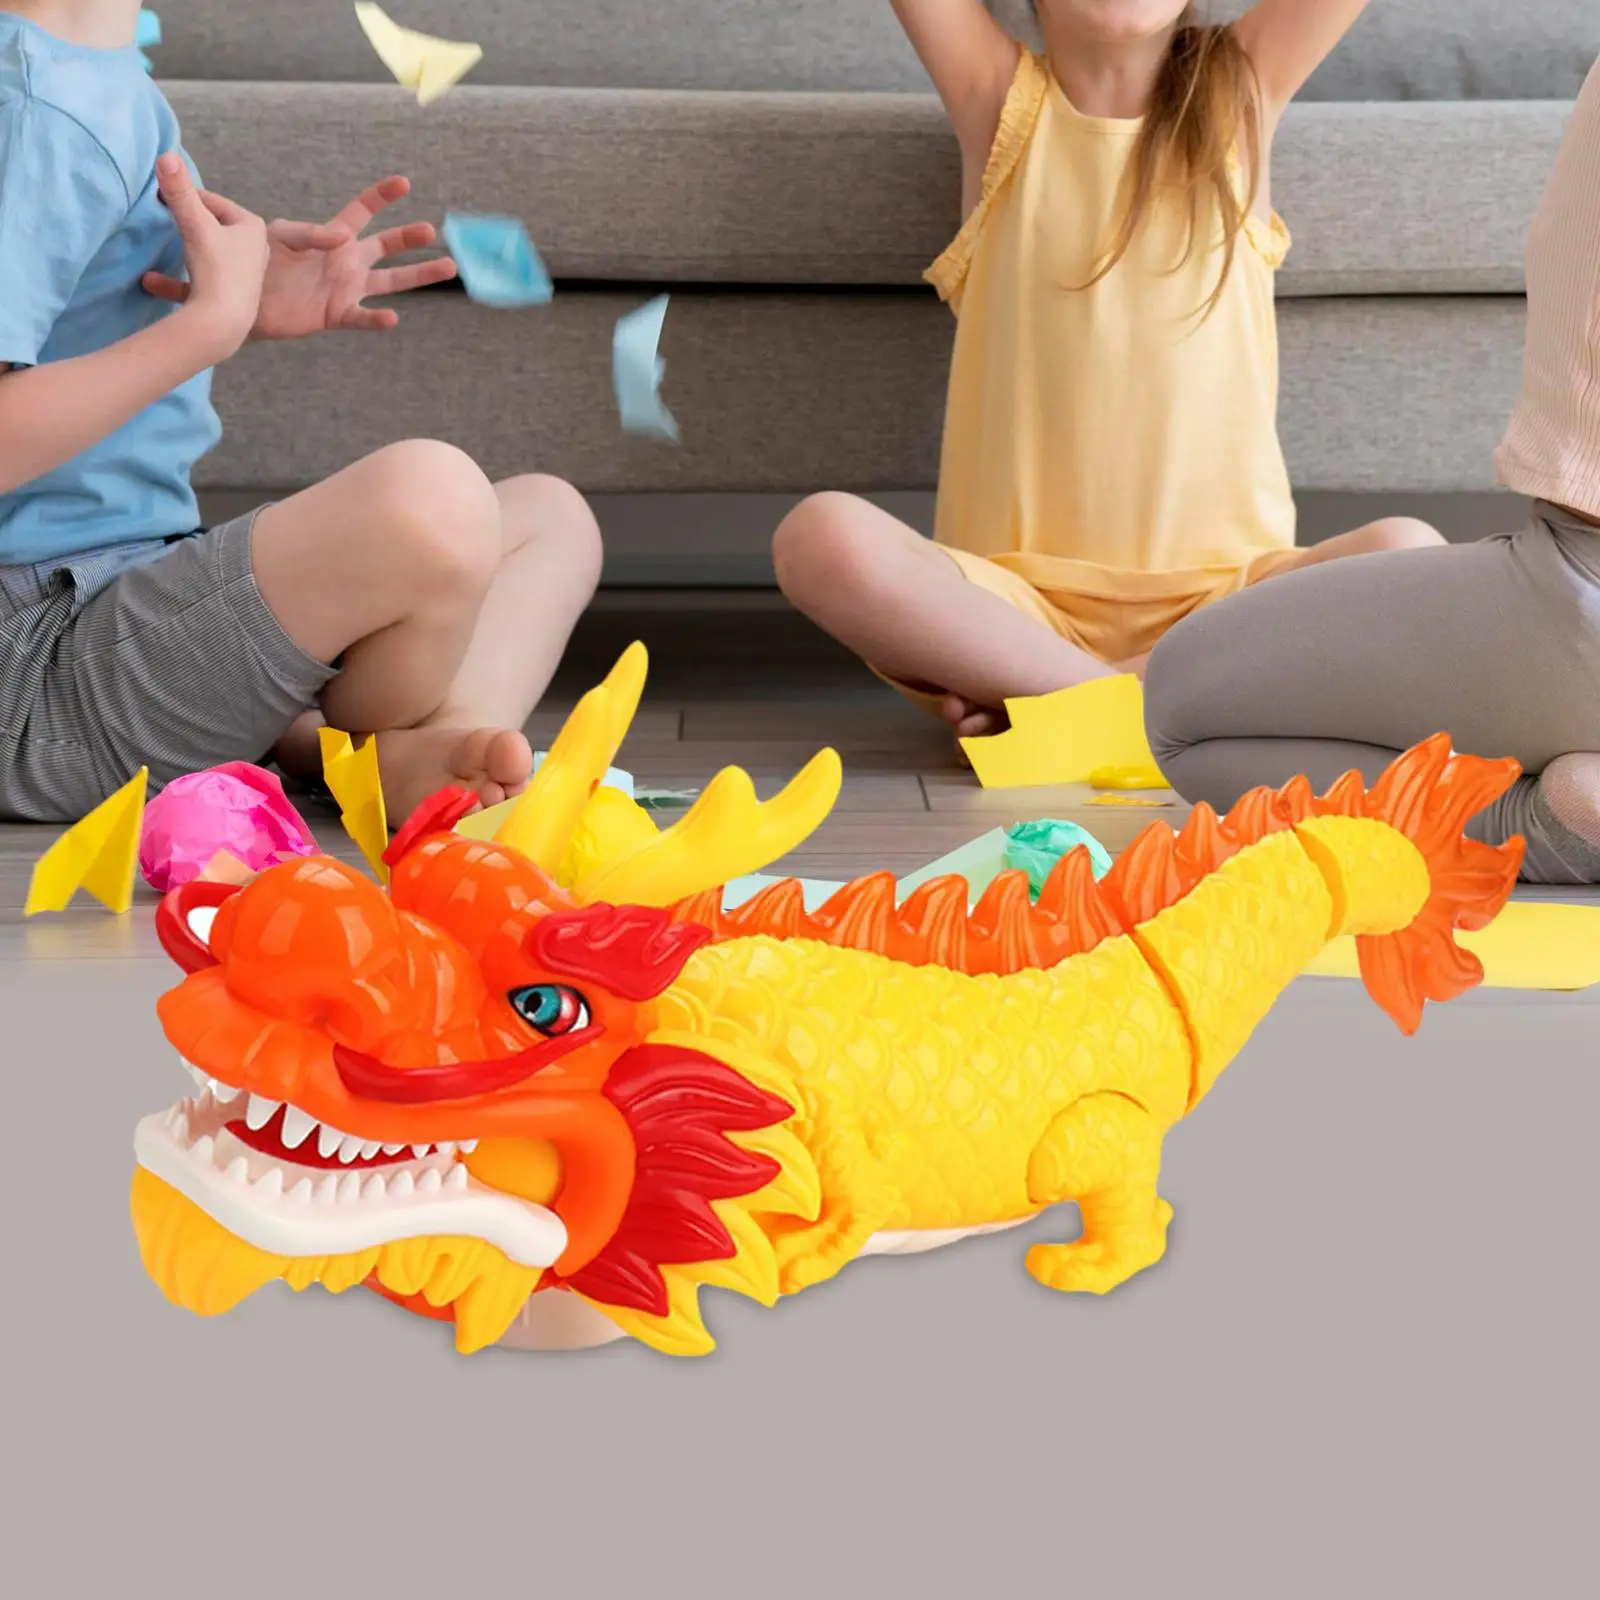 Eletric Dragon Toy Realistic Mechanical Bathroom Gifts Creative Animal Flexible Infant Toy for Kid Boys Age 8-12 Children Girls